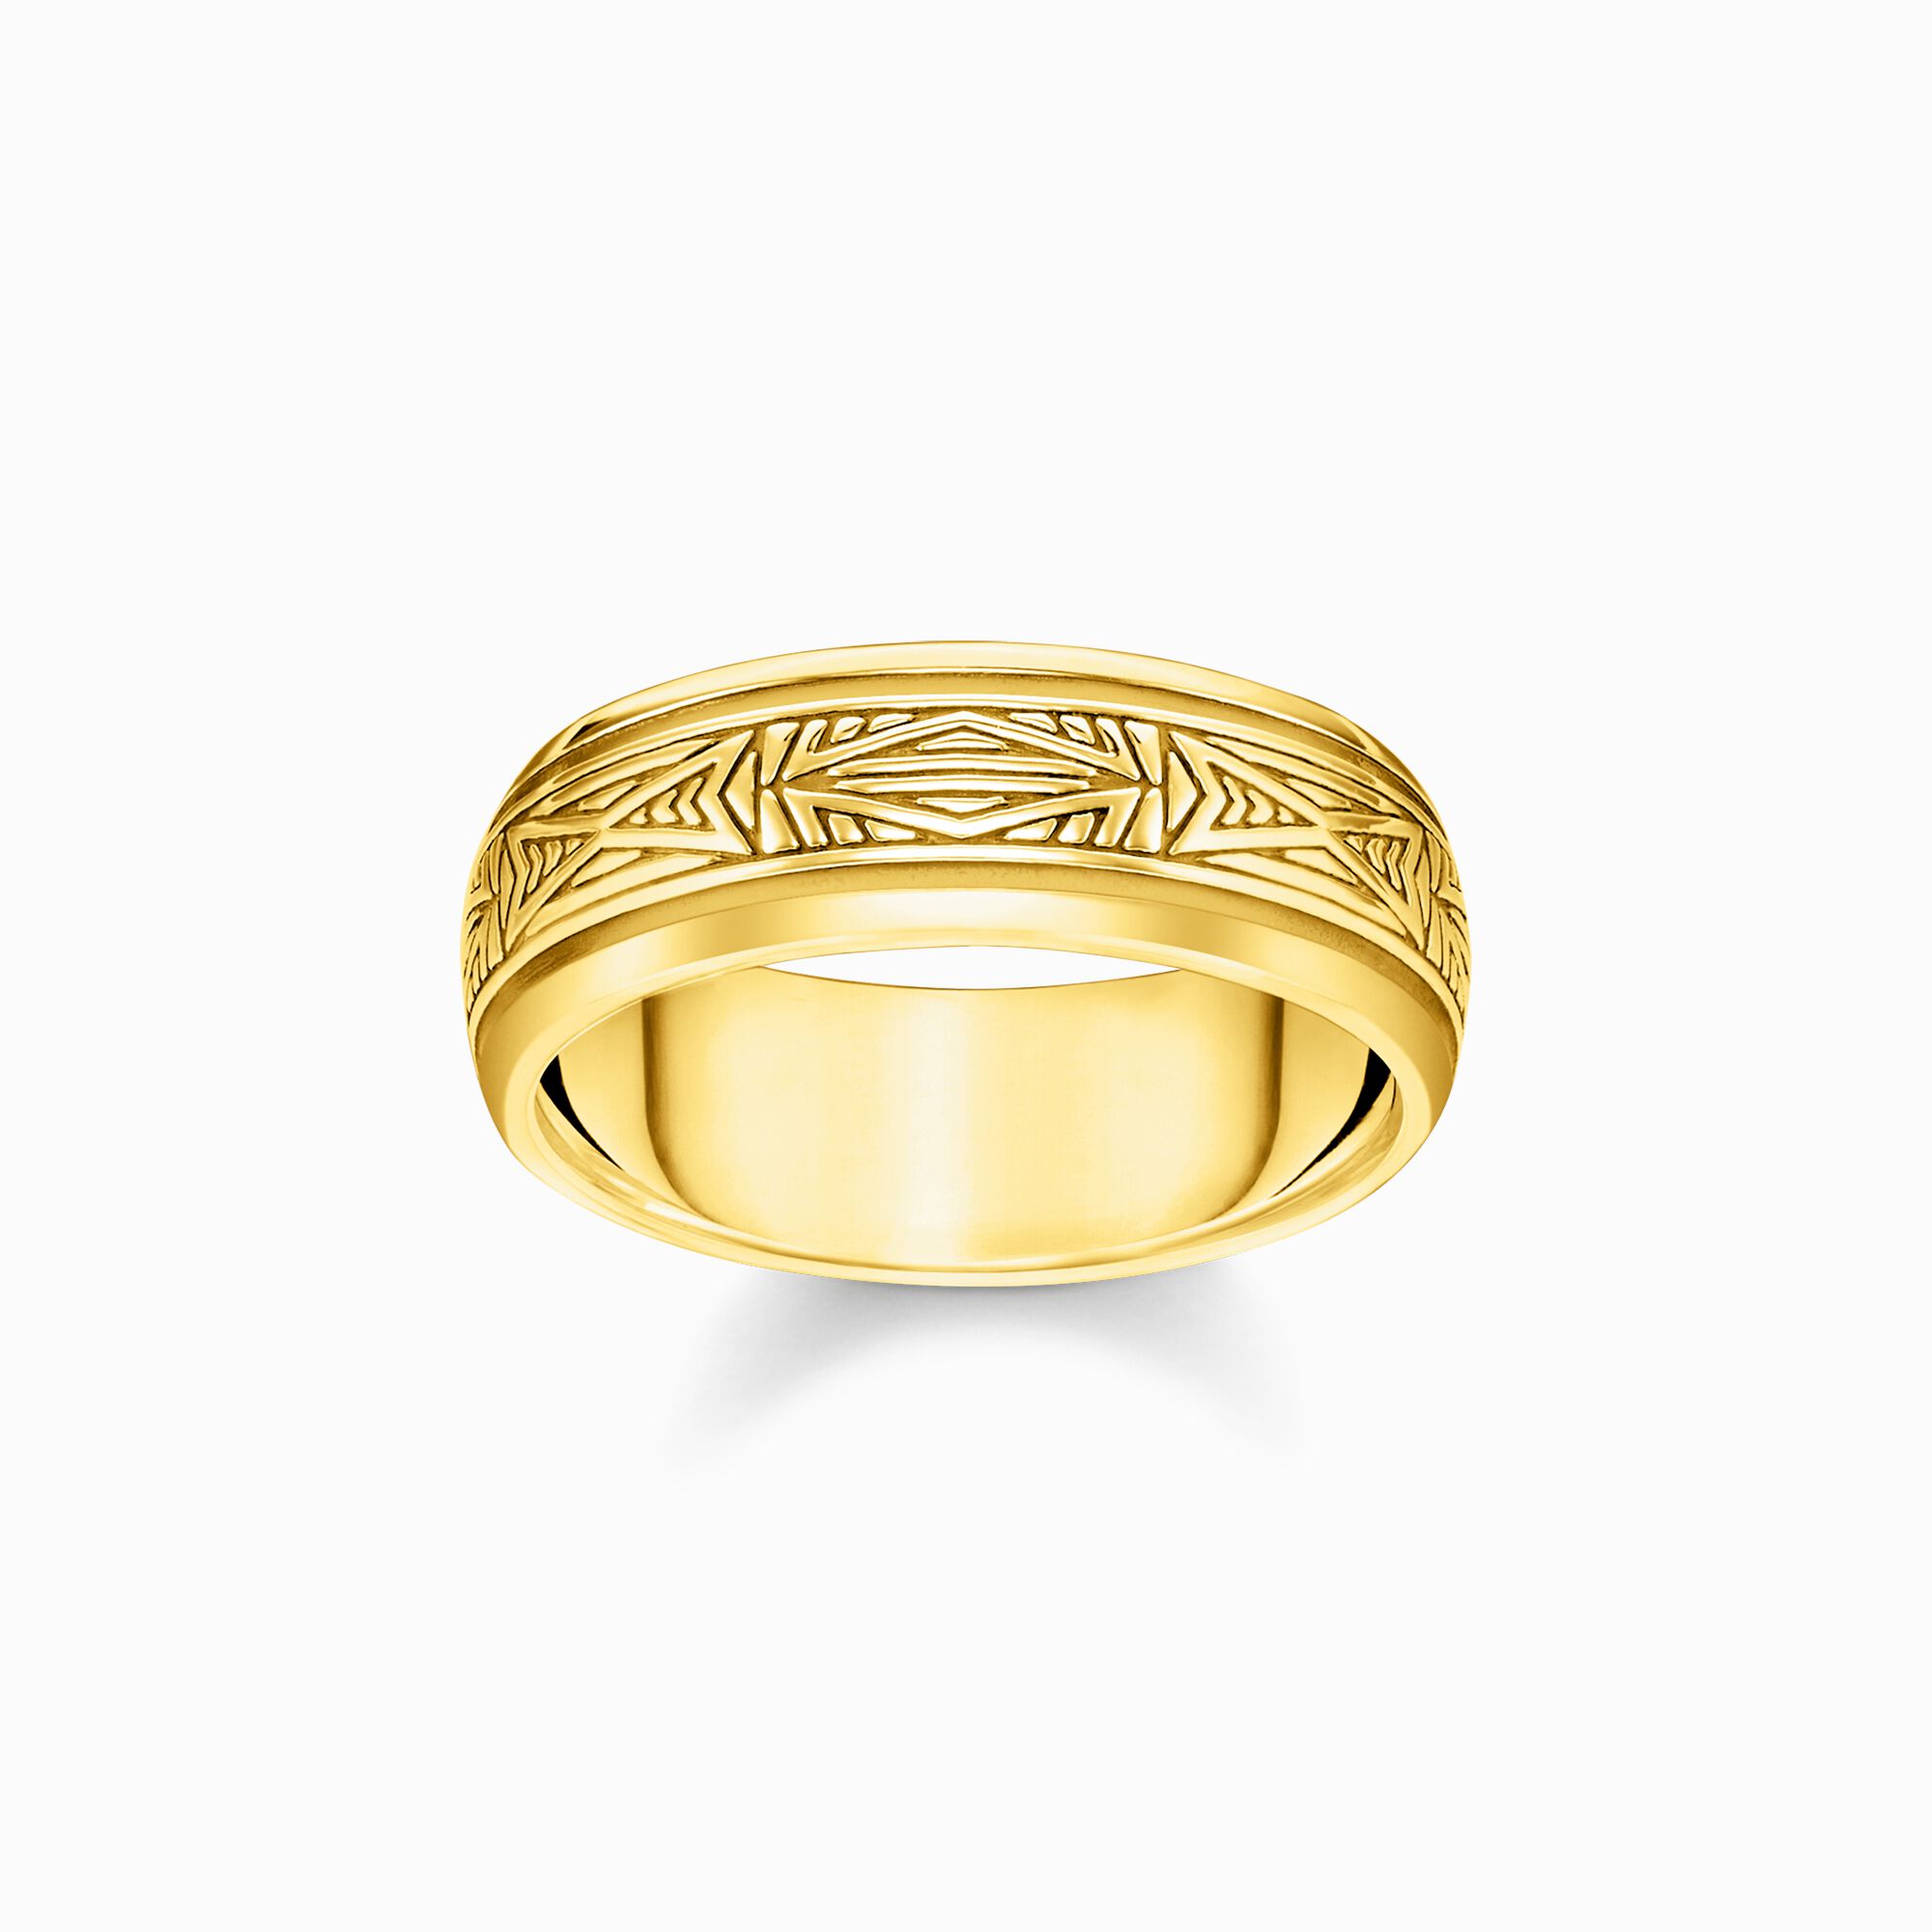 Ring ornament guld ur kollektionen  i THOMAS SABO:s onlineshop